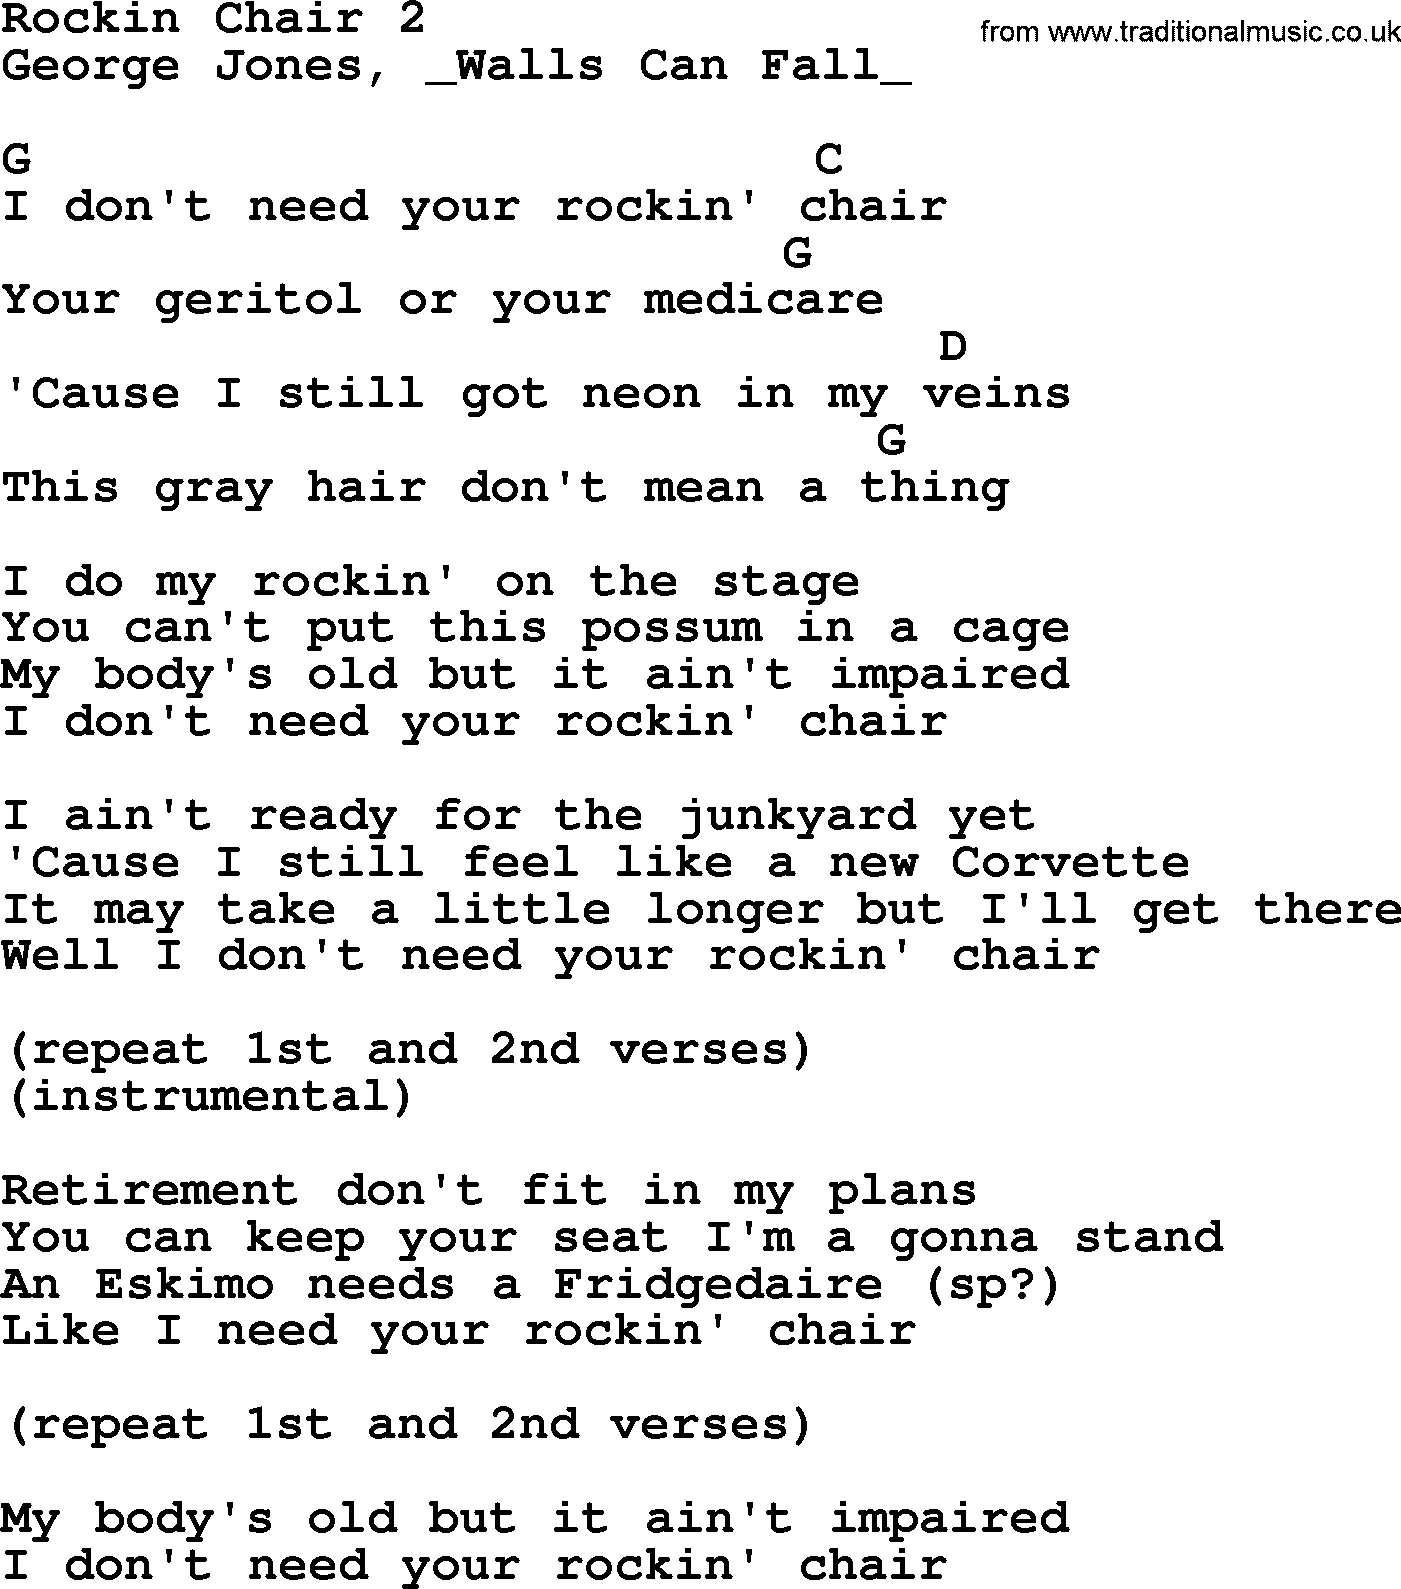 George Jones song: Rockin Chair 2, lyrics and chords